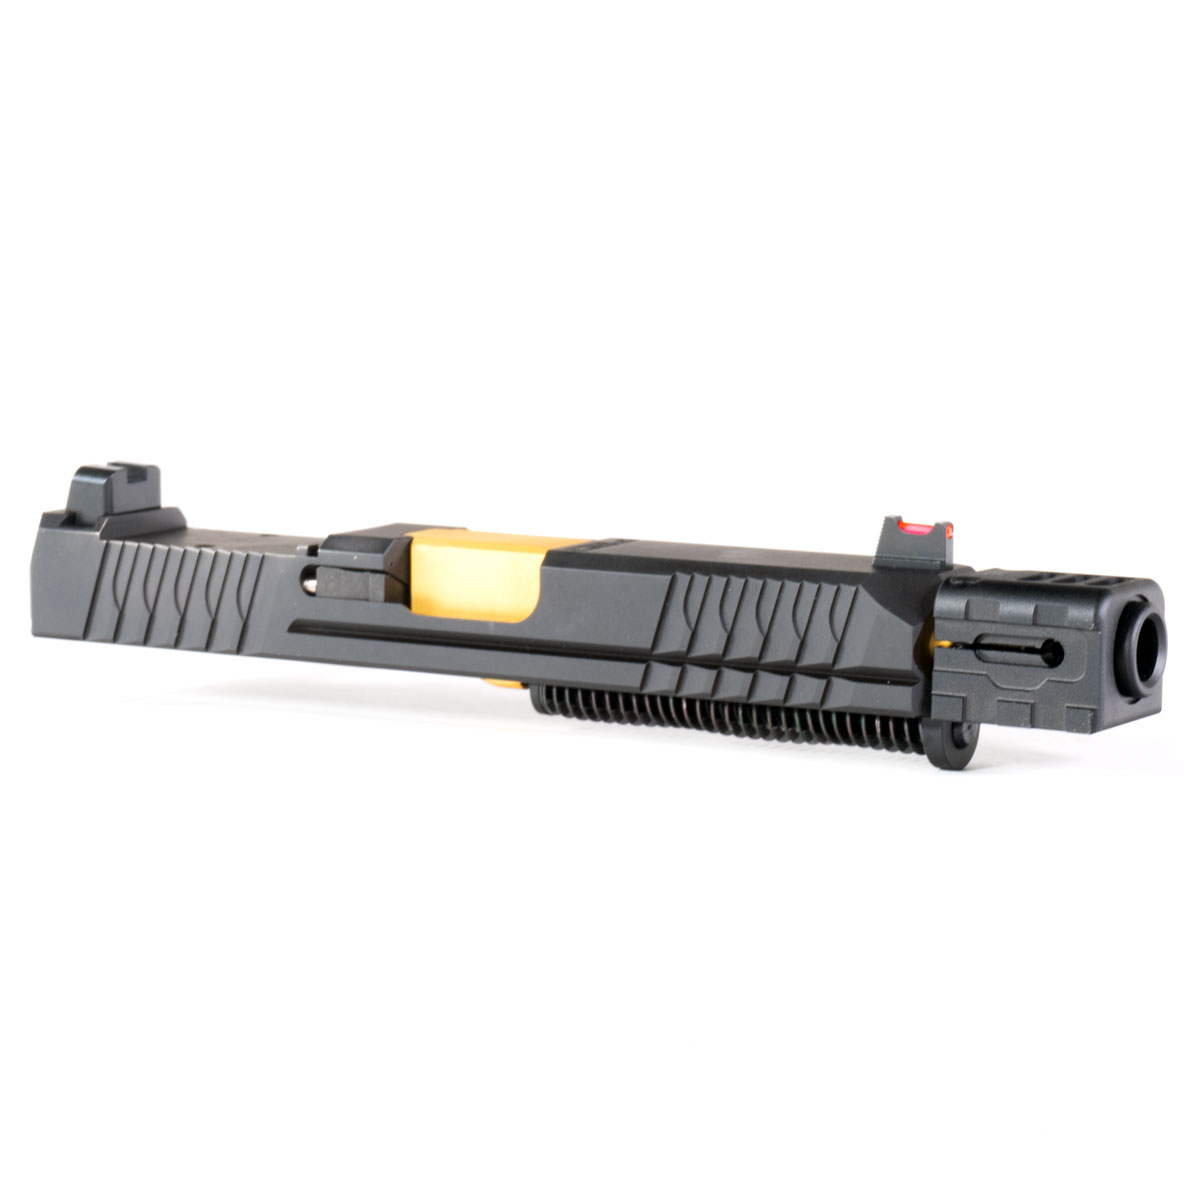 DDS 'Patlama w/ Sylvan Arms Compensator' 9mm Complete Slide Kit - Glock 19 Gen 1-3 Compatible